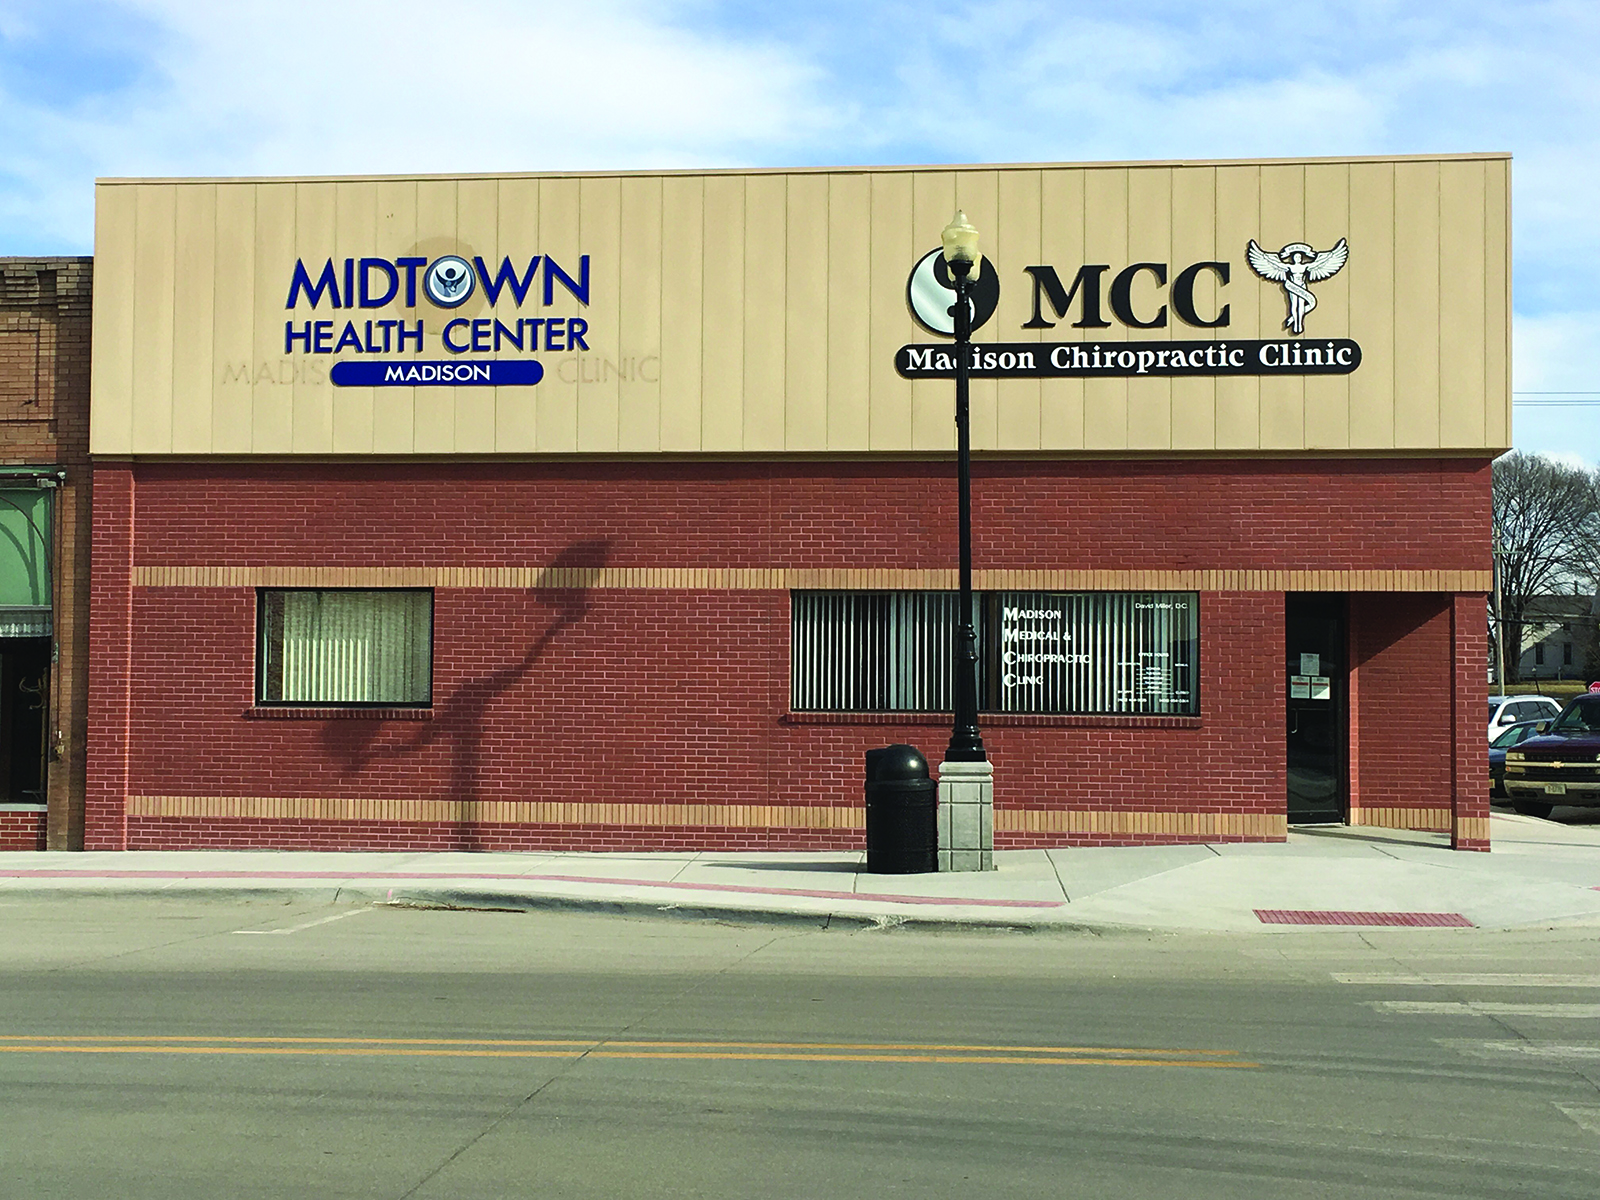 Midtown Health Center